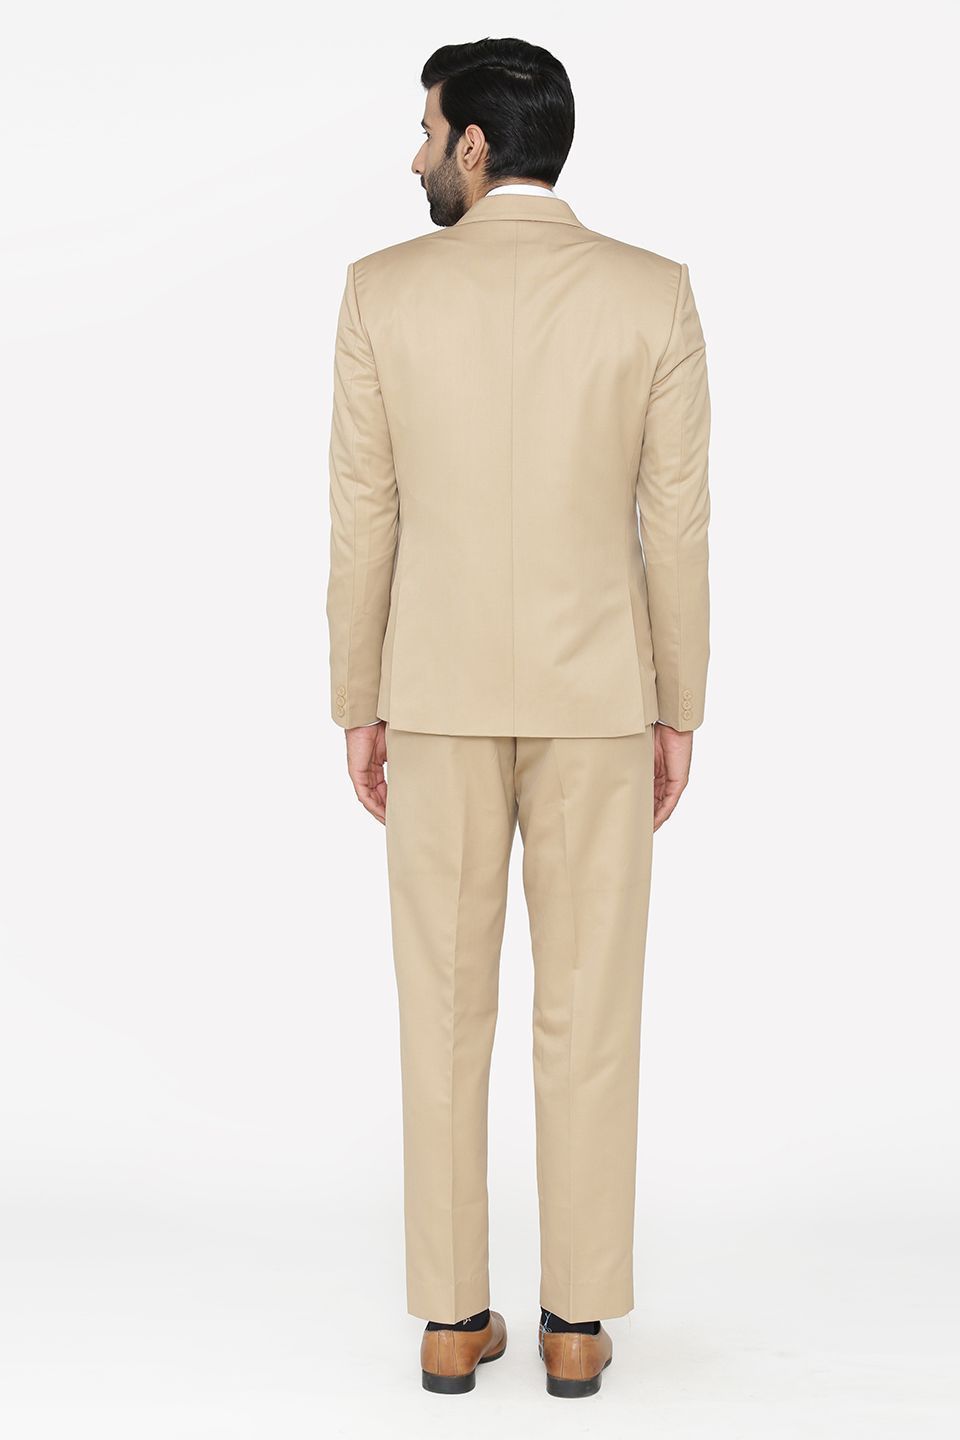 Polyester Cotton Beige Suit